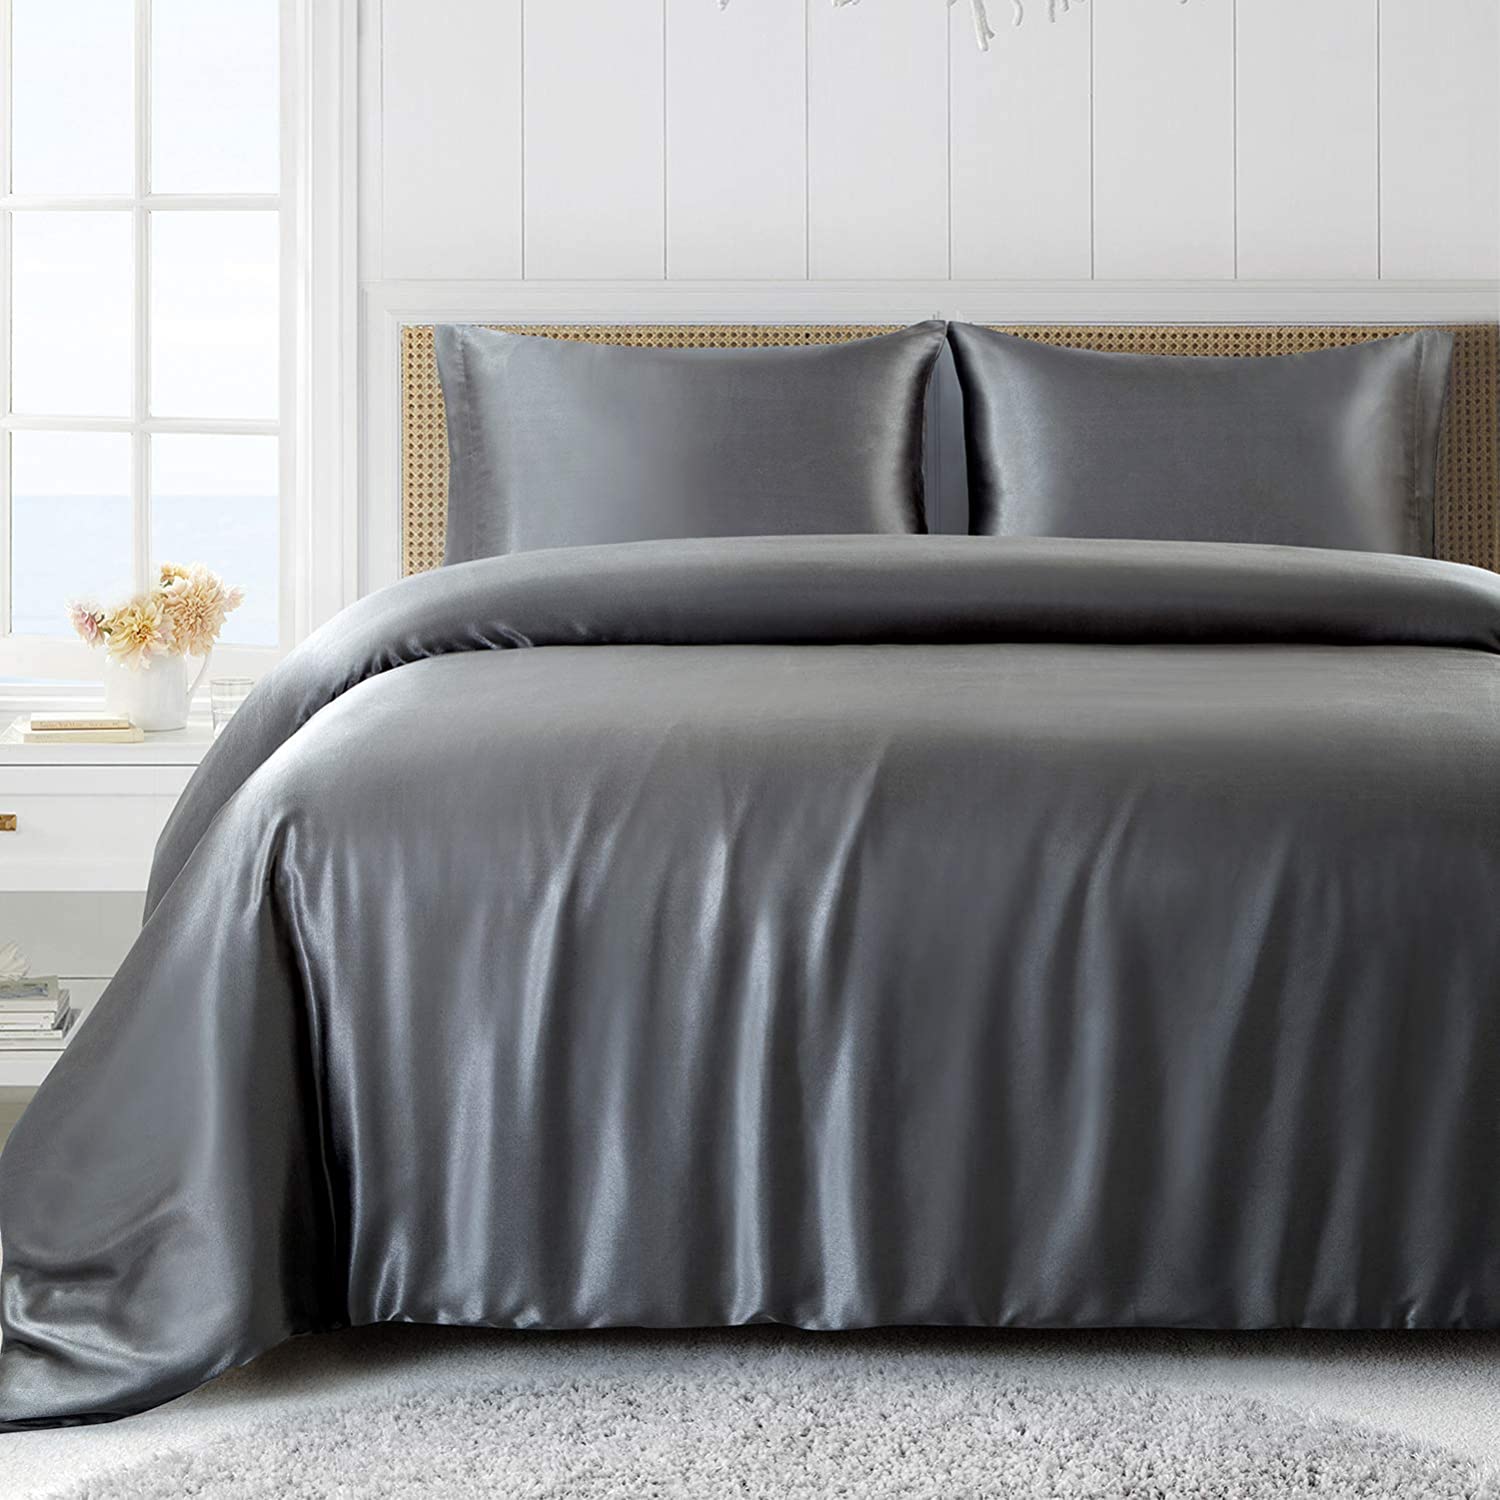 LUXURY Soft Silk Feel NAVY BLUE SATIN QUEEN Size Doona Duvet Quilt Cover Bed Set 